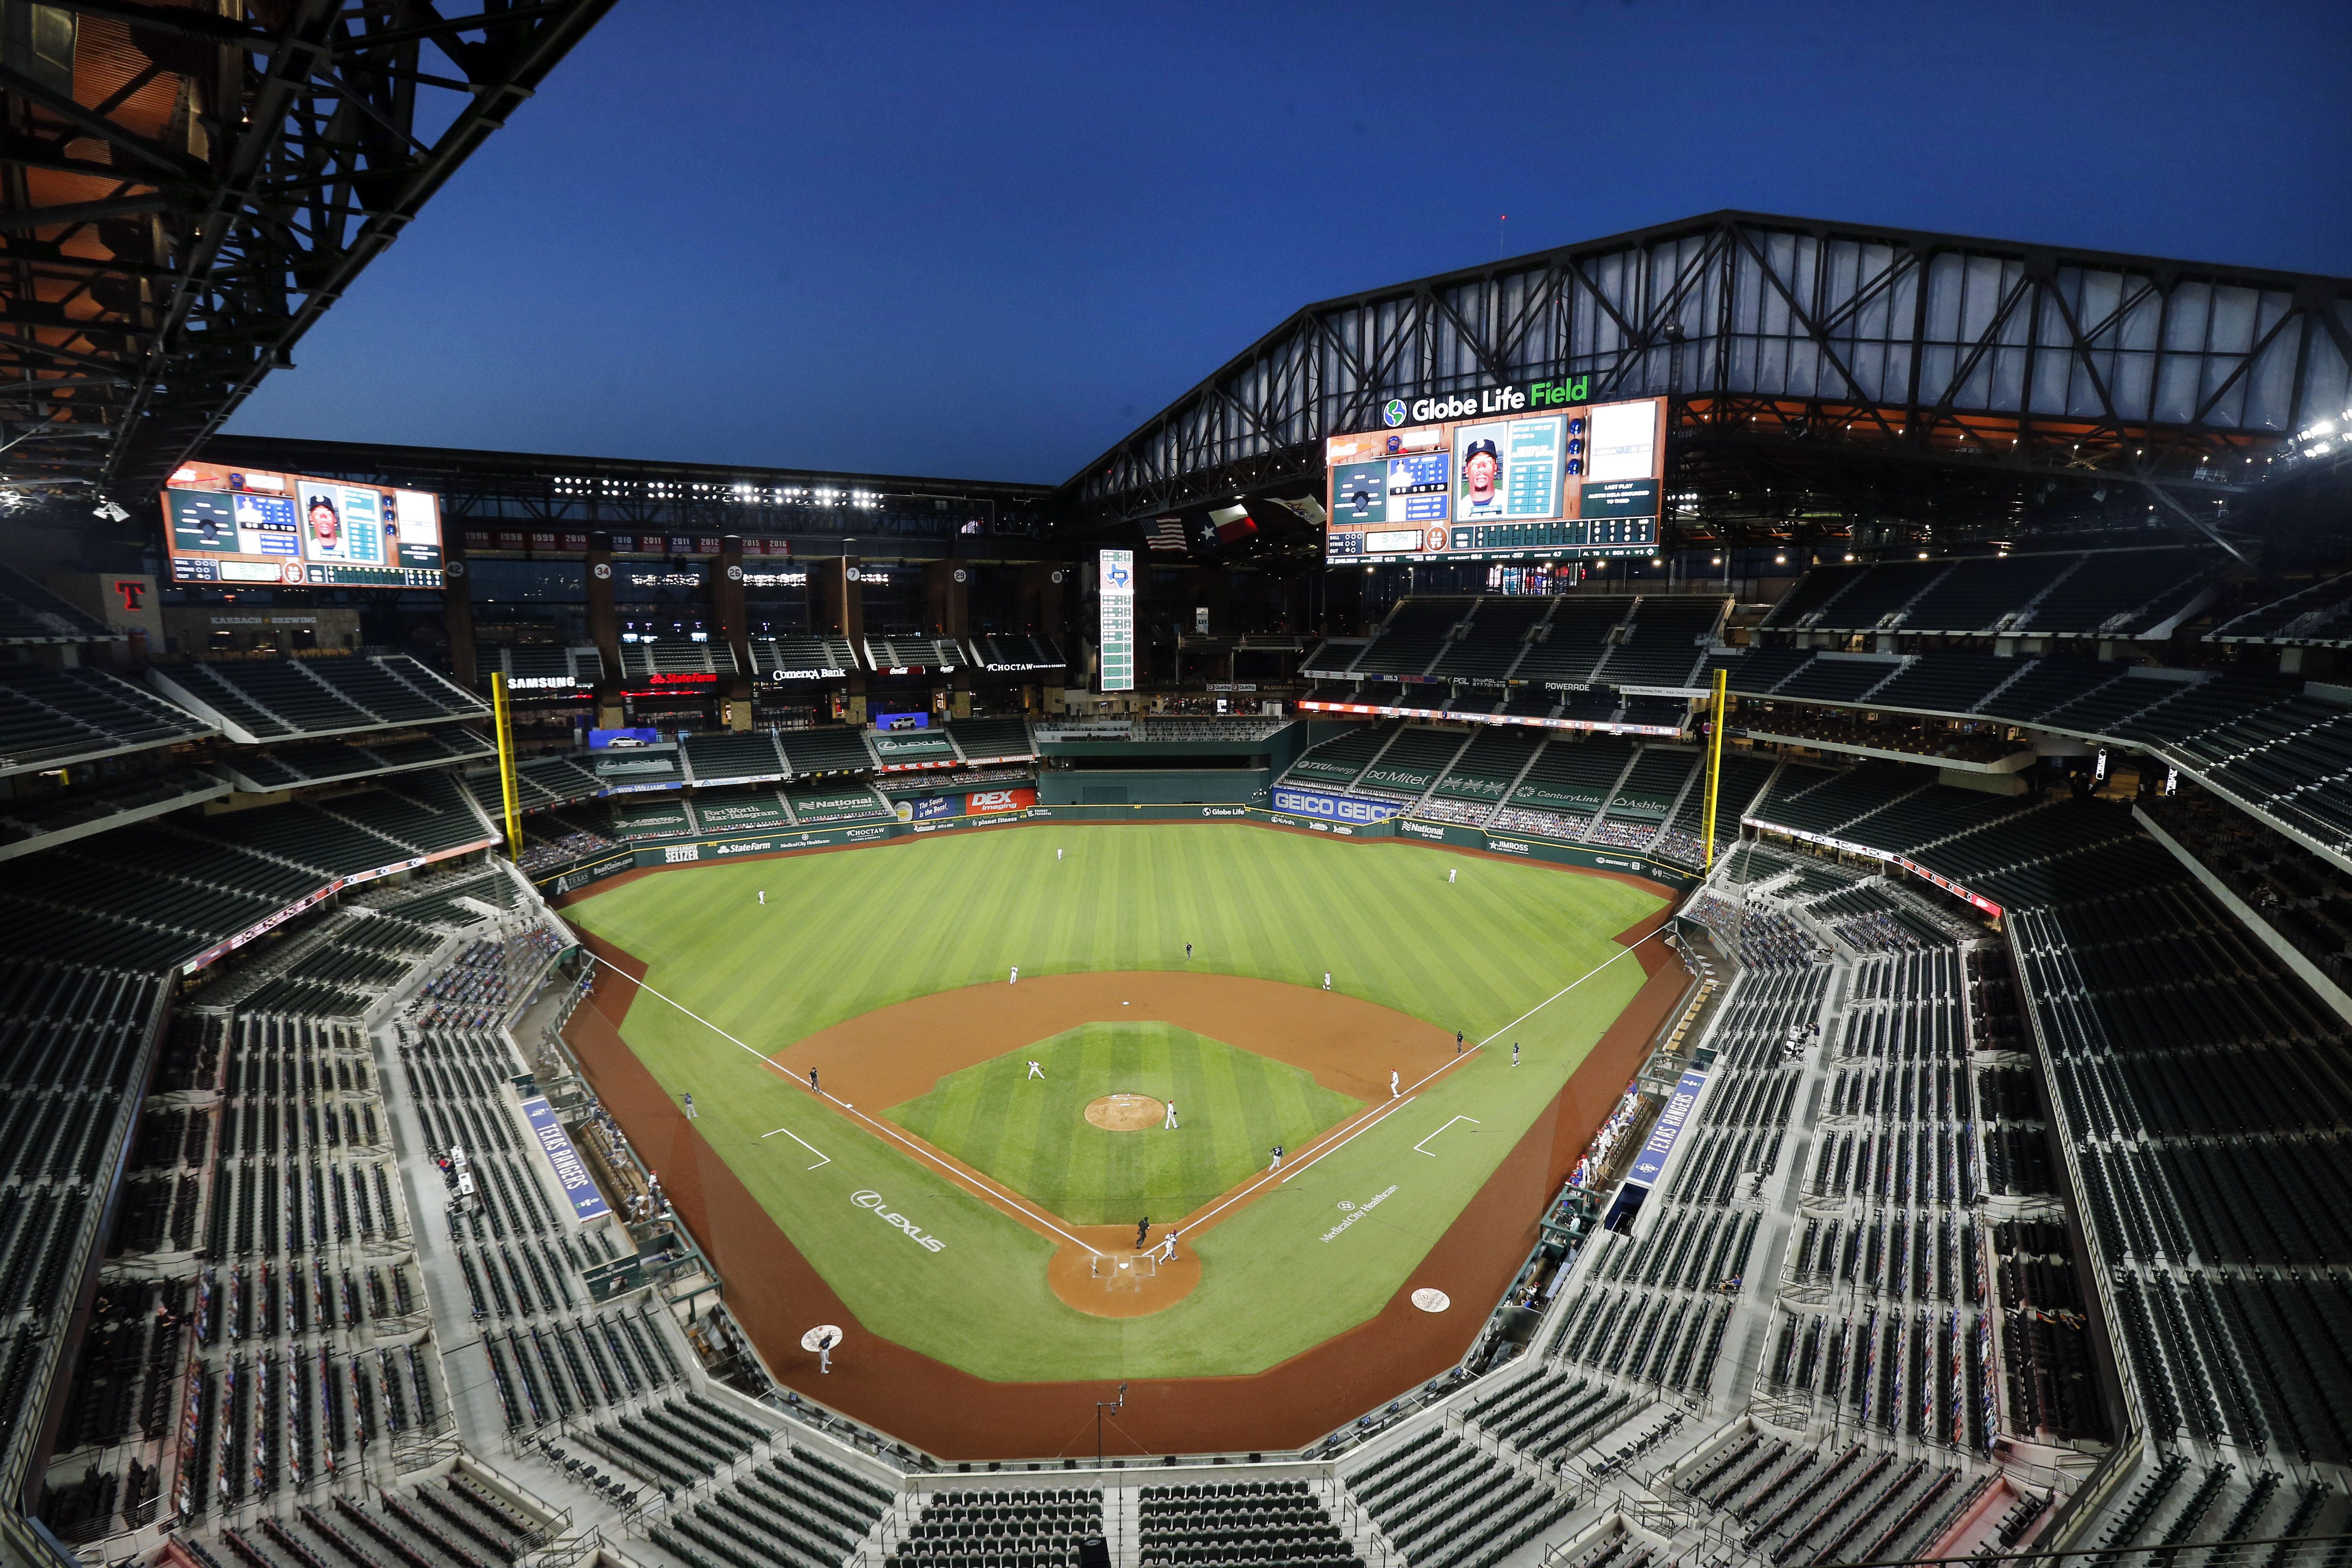 New Rangers ballpark gets blasted by baseball fans: 'Sheet metal warehouse  look